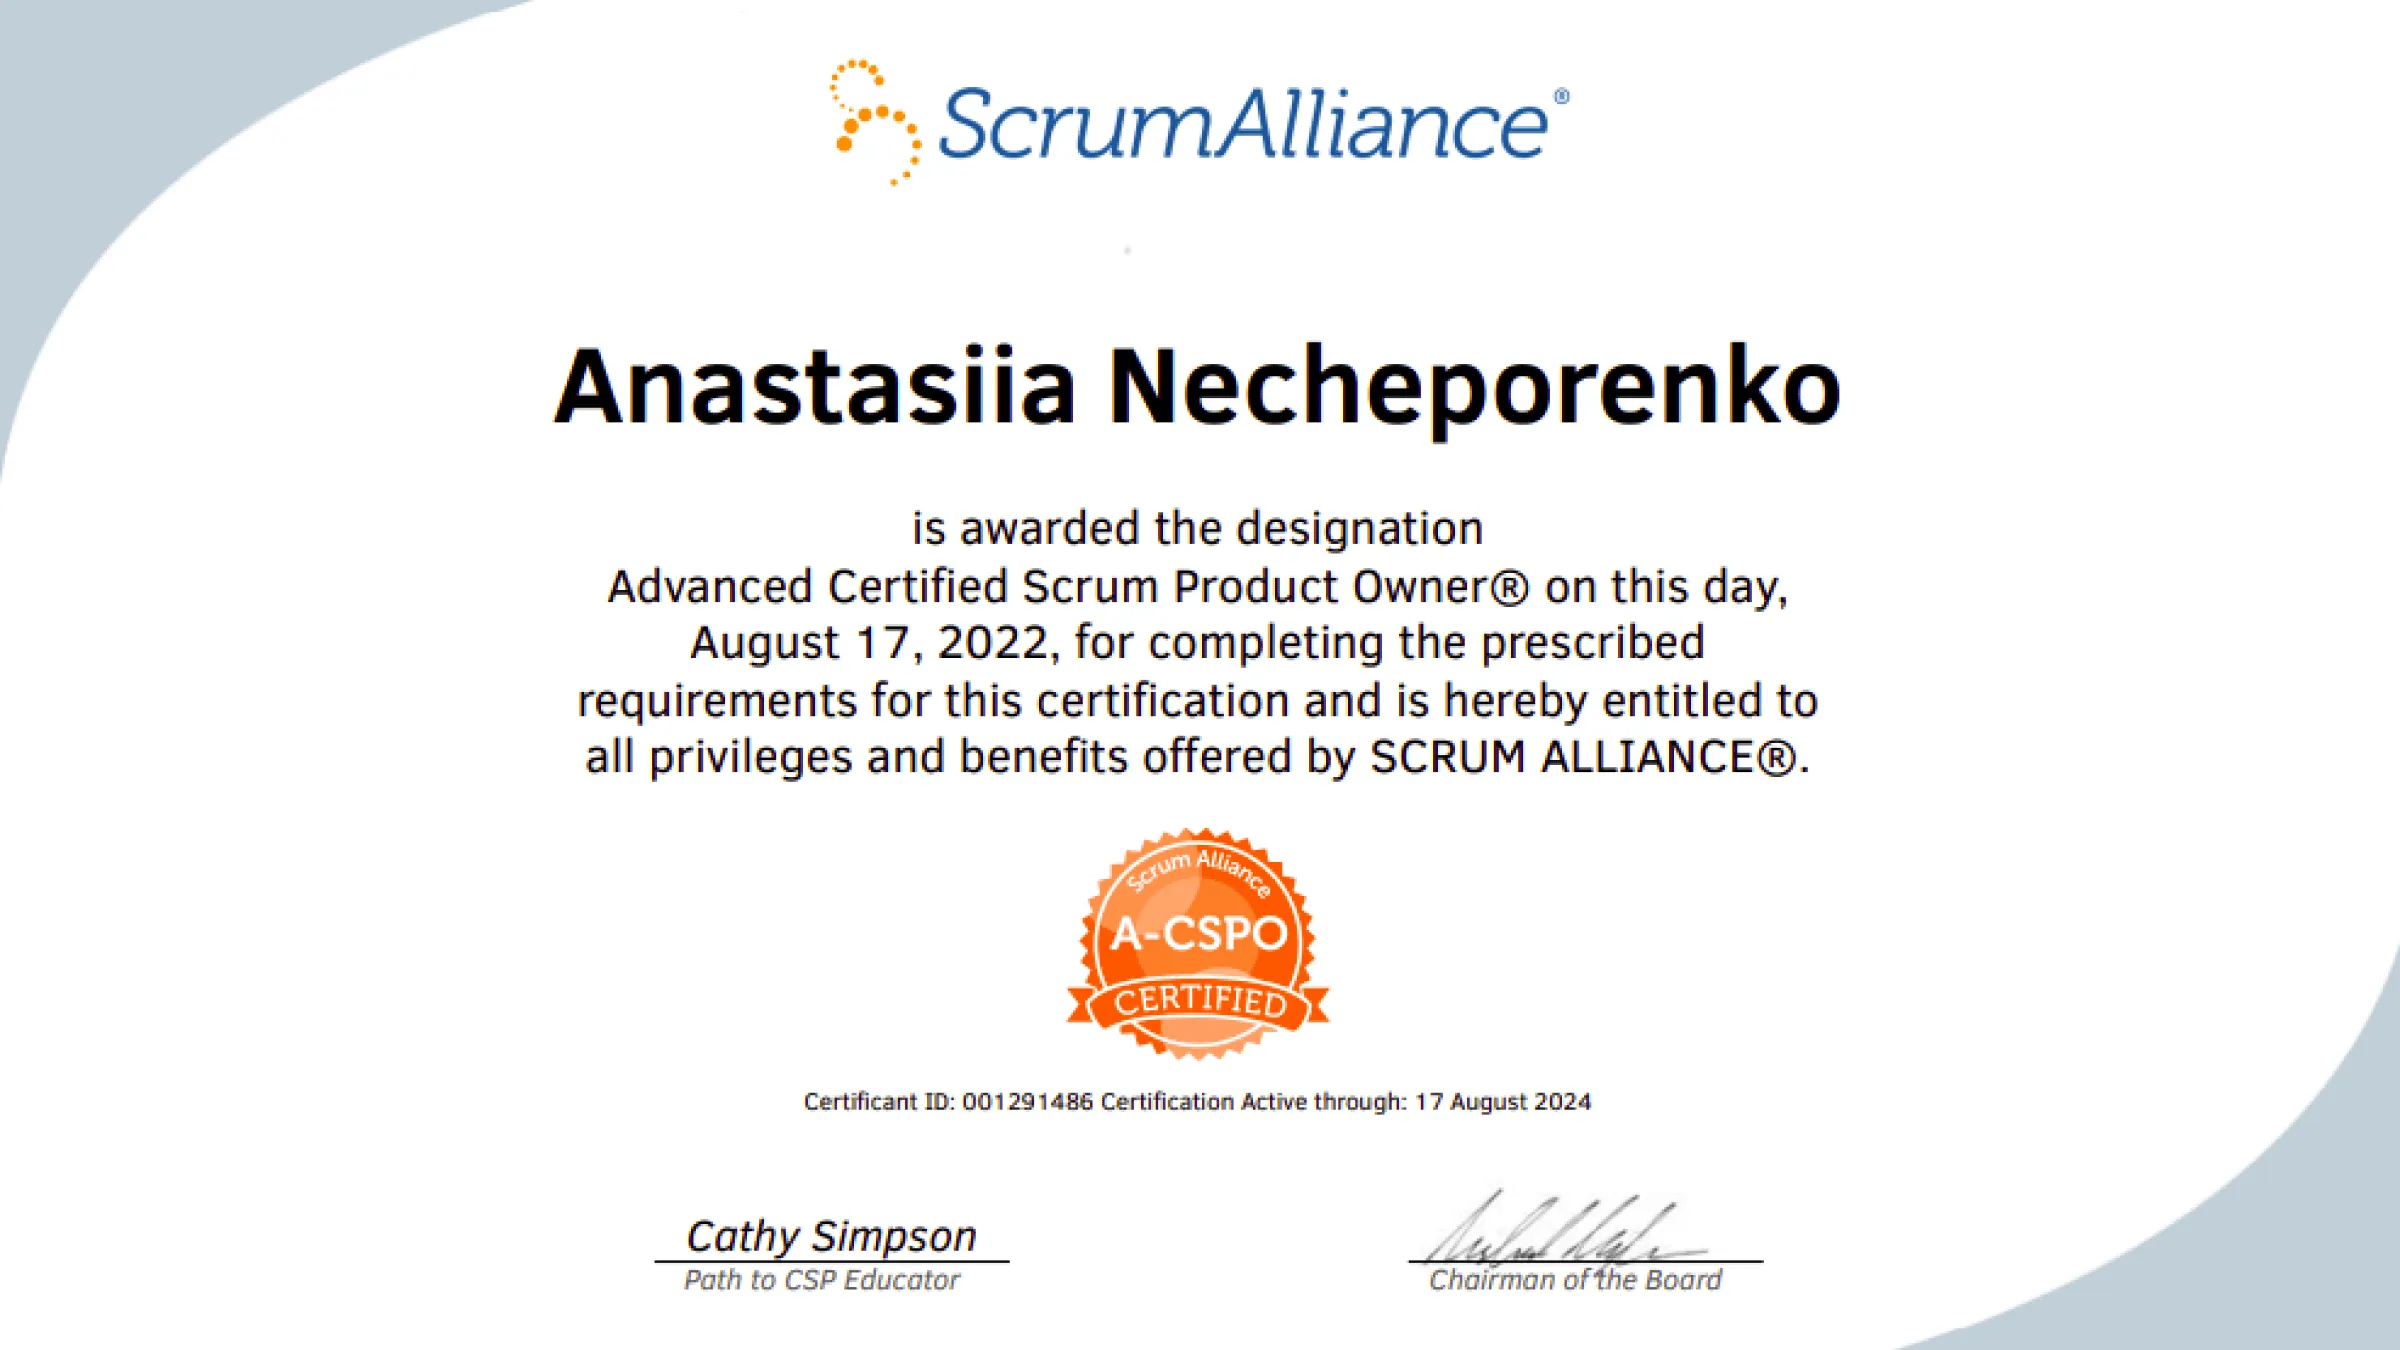 A-CSPO certificate of Cleveroad’s BA Anastasiia Necheporenko